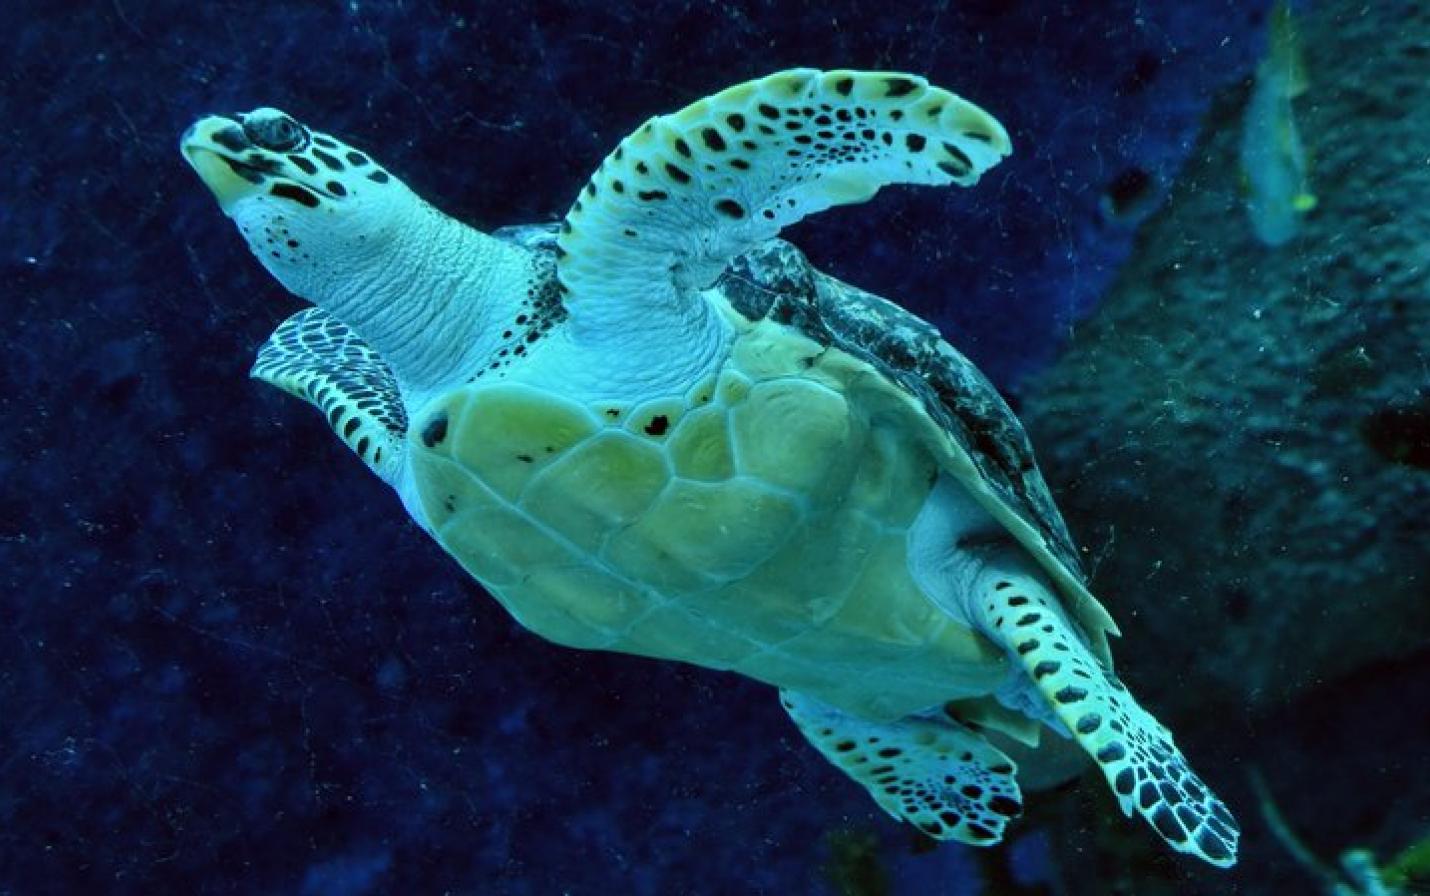 sea turtle image from original publication